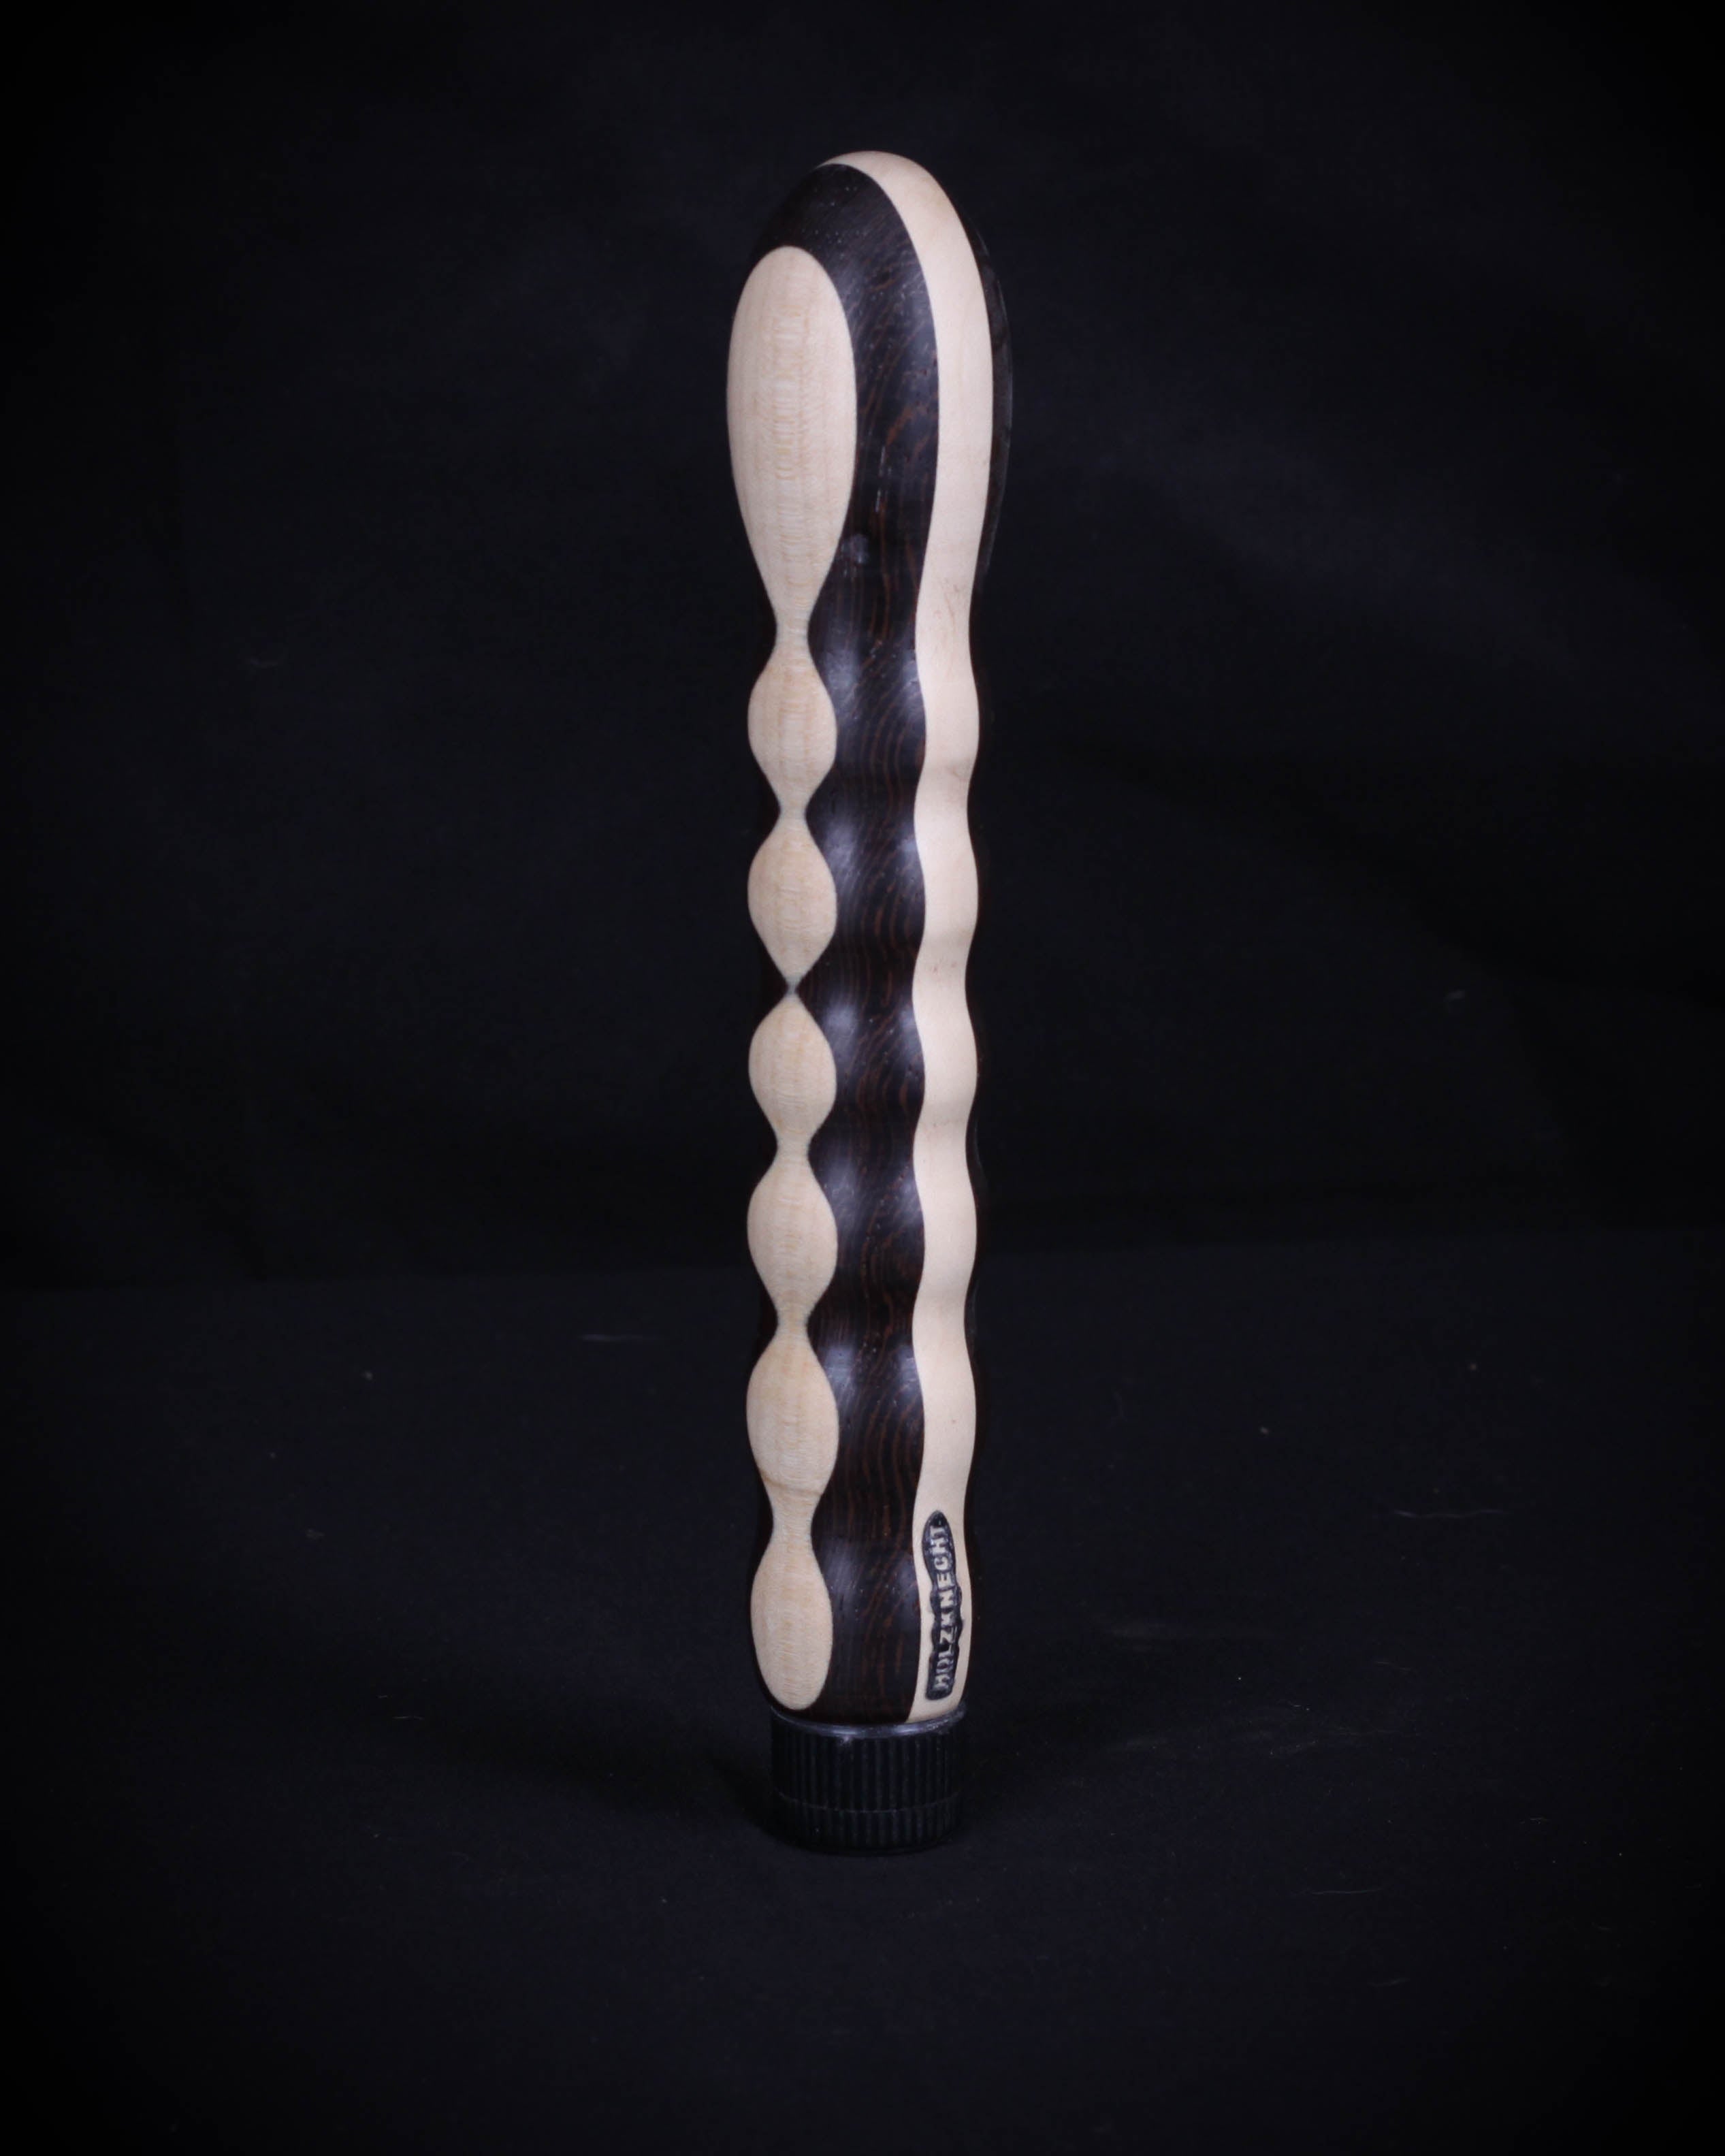 LAUSBUB || Black&White || Holzvibrator || Holzdildo || Sex Toy || Wood Vibrator || handmade by Holz-Knecht.at